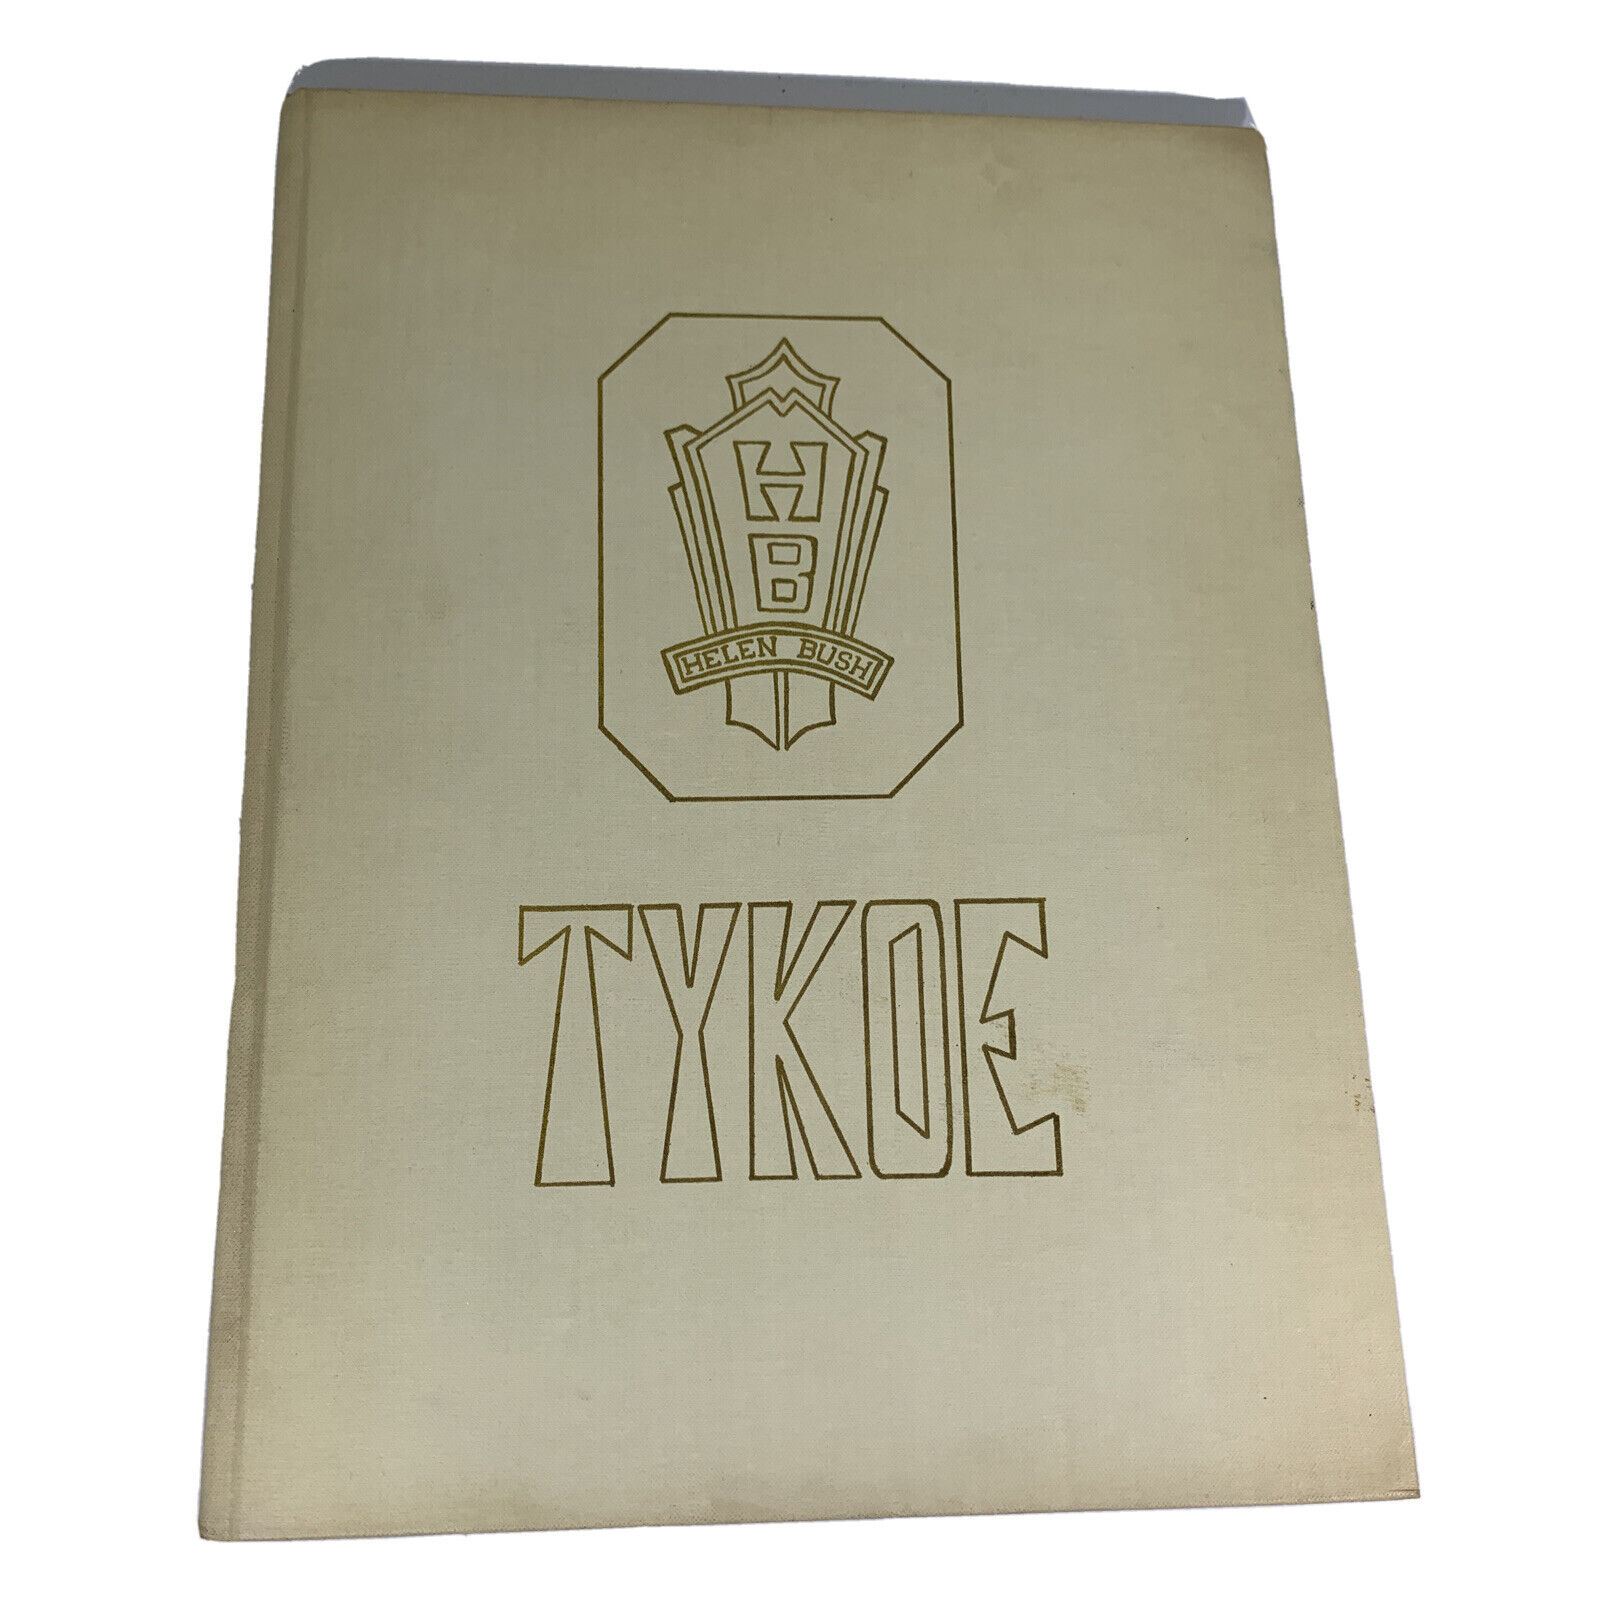 1947 The Helen Bush School TyKoe Yearbook Seattle Washington book